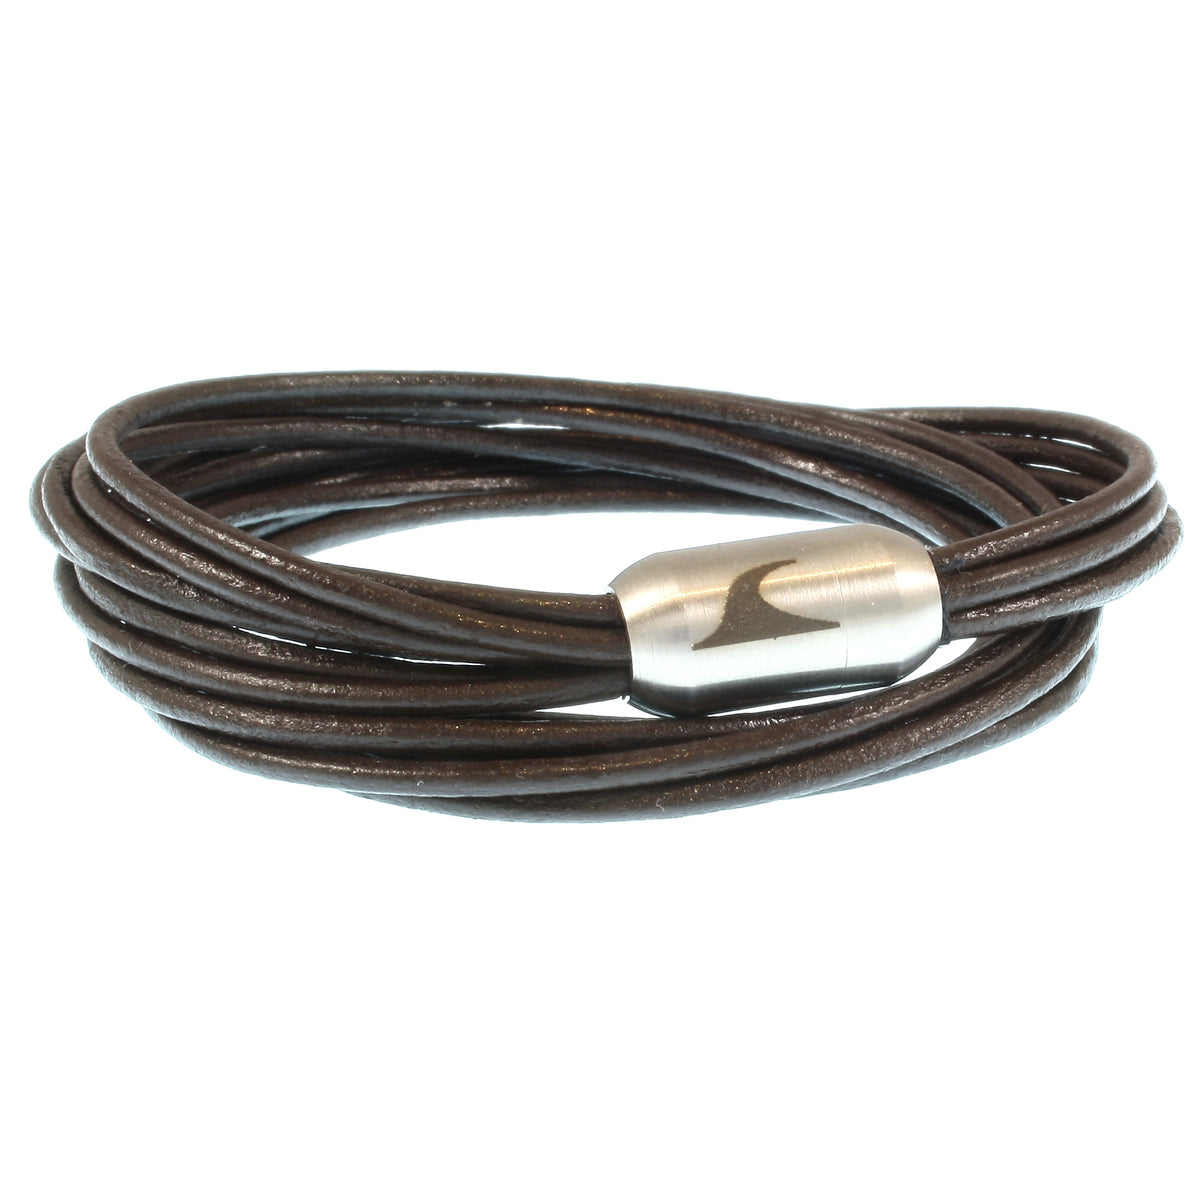 Damen-Leder-armband-fem2-braun-silber-Edelstahlverschluss-vorn-wavepirate-shop-r